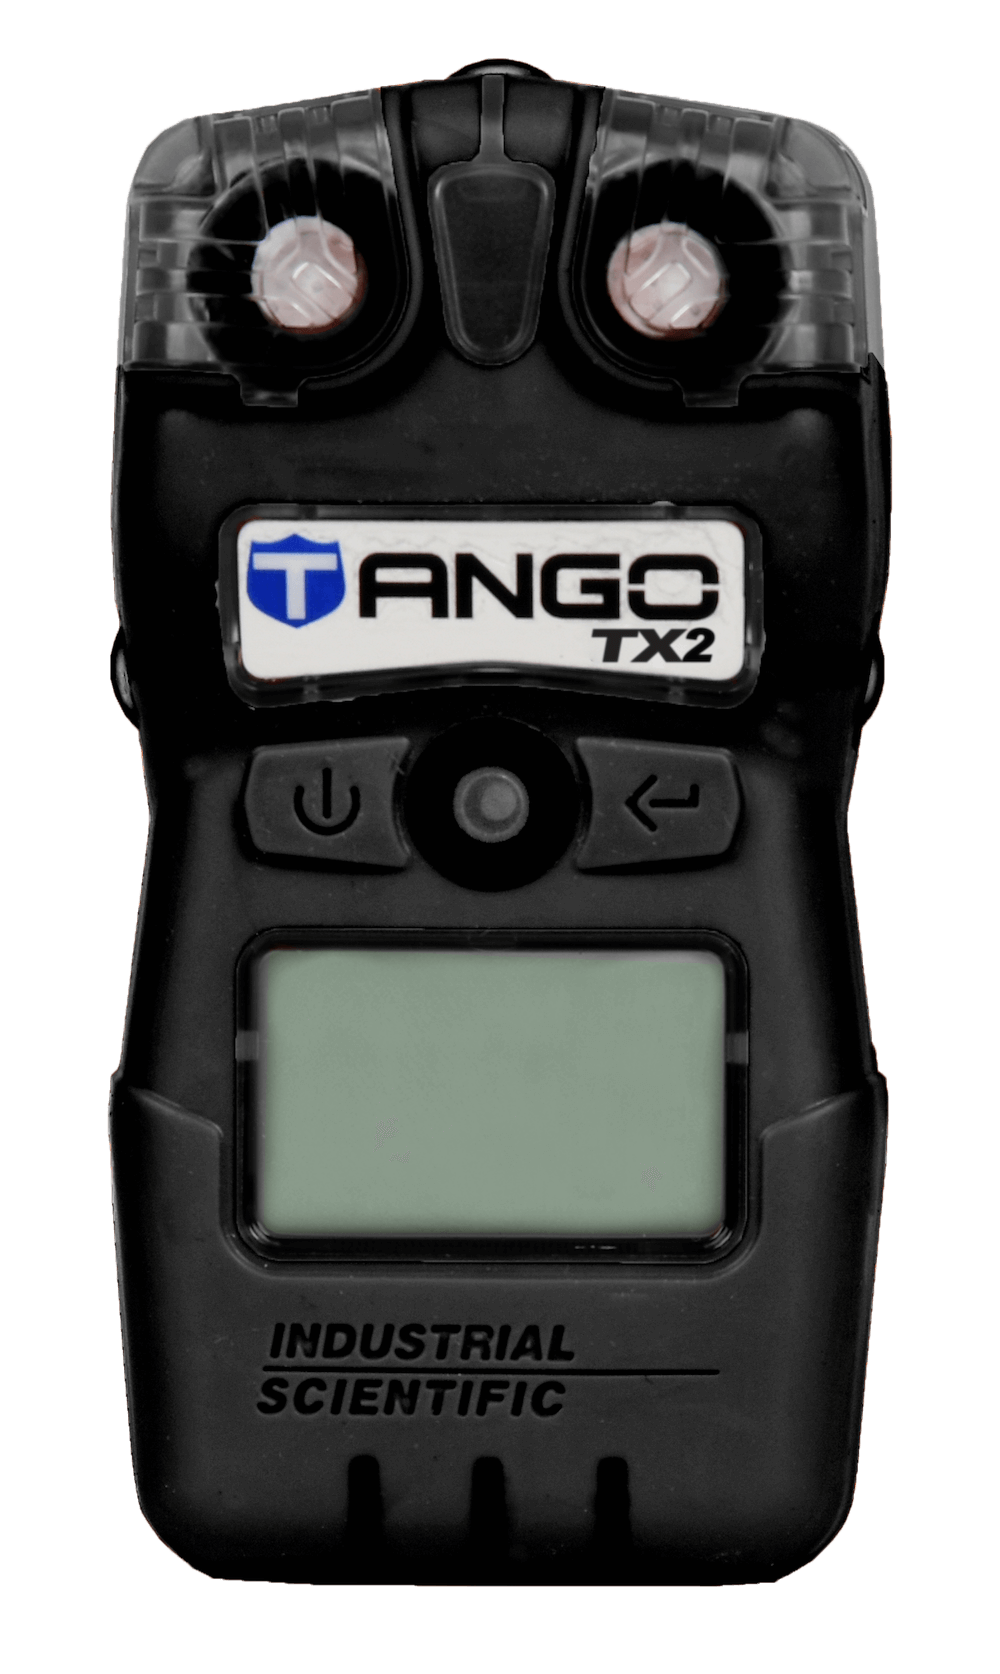 Tango TX2 product image